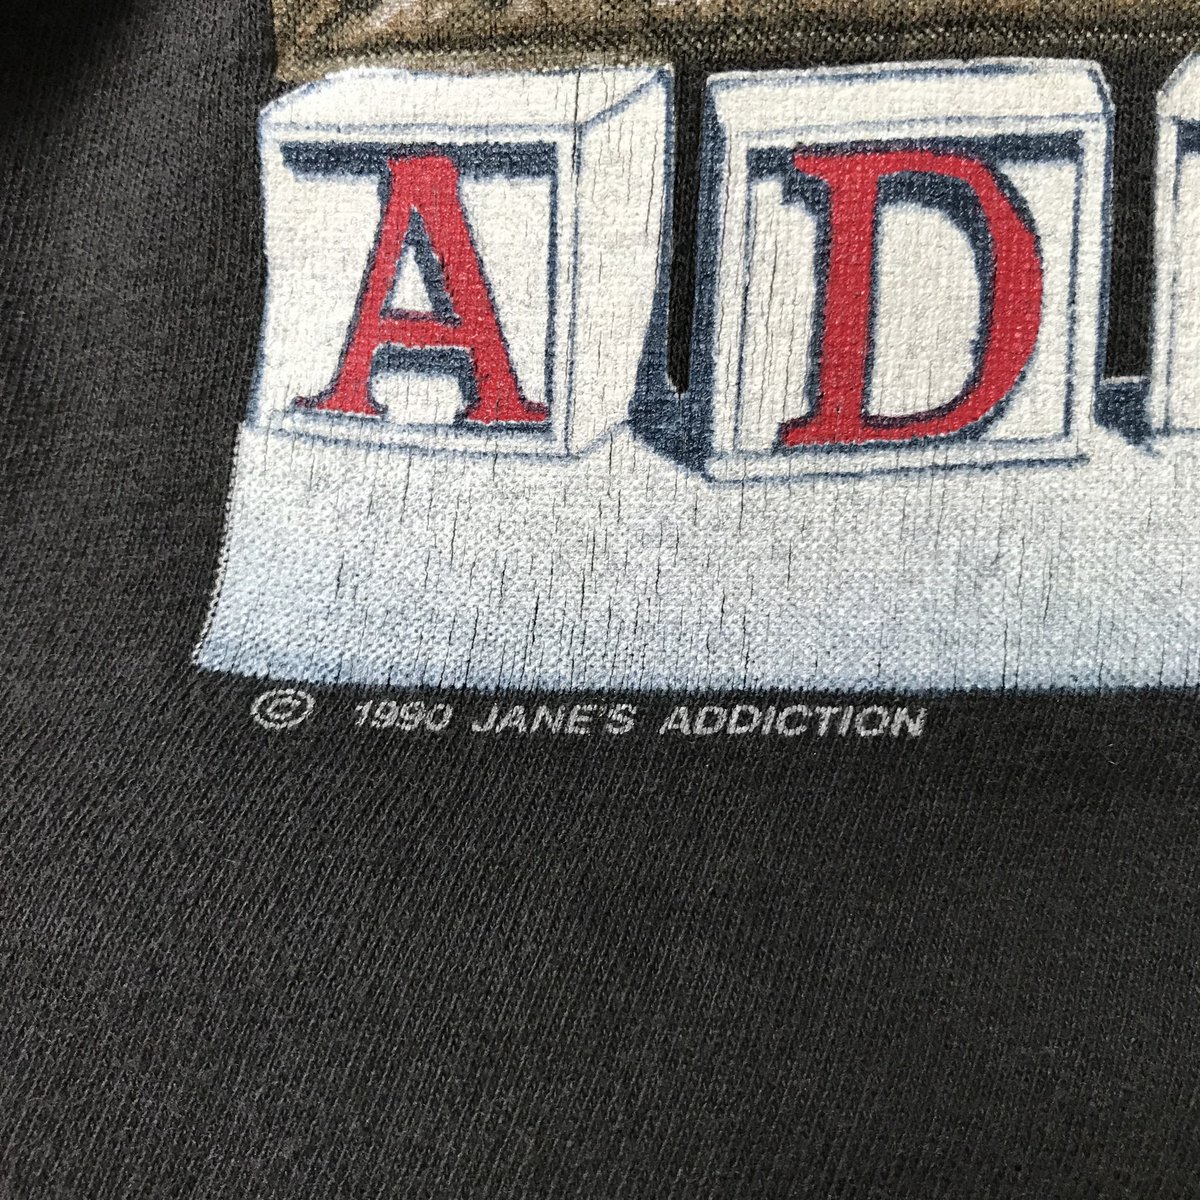 90s jane's addiction ジェーンズアディクション ビンテージ ロックT